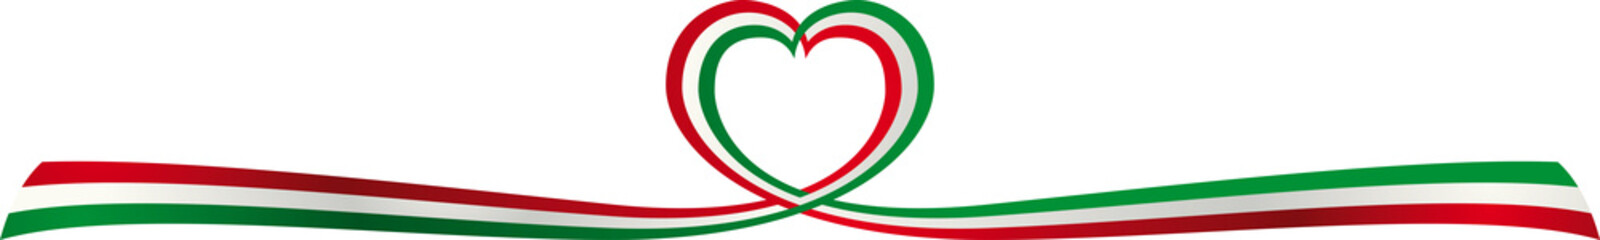 Banner nastro italia - love italy banner